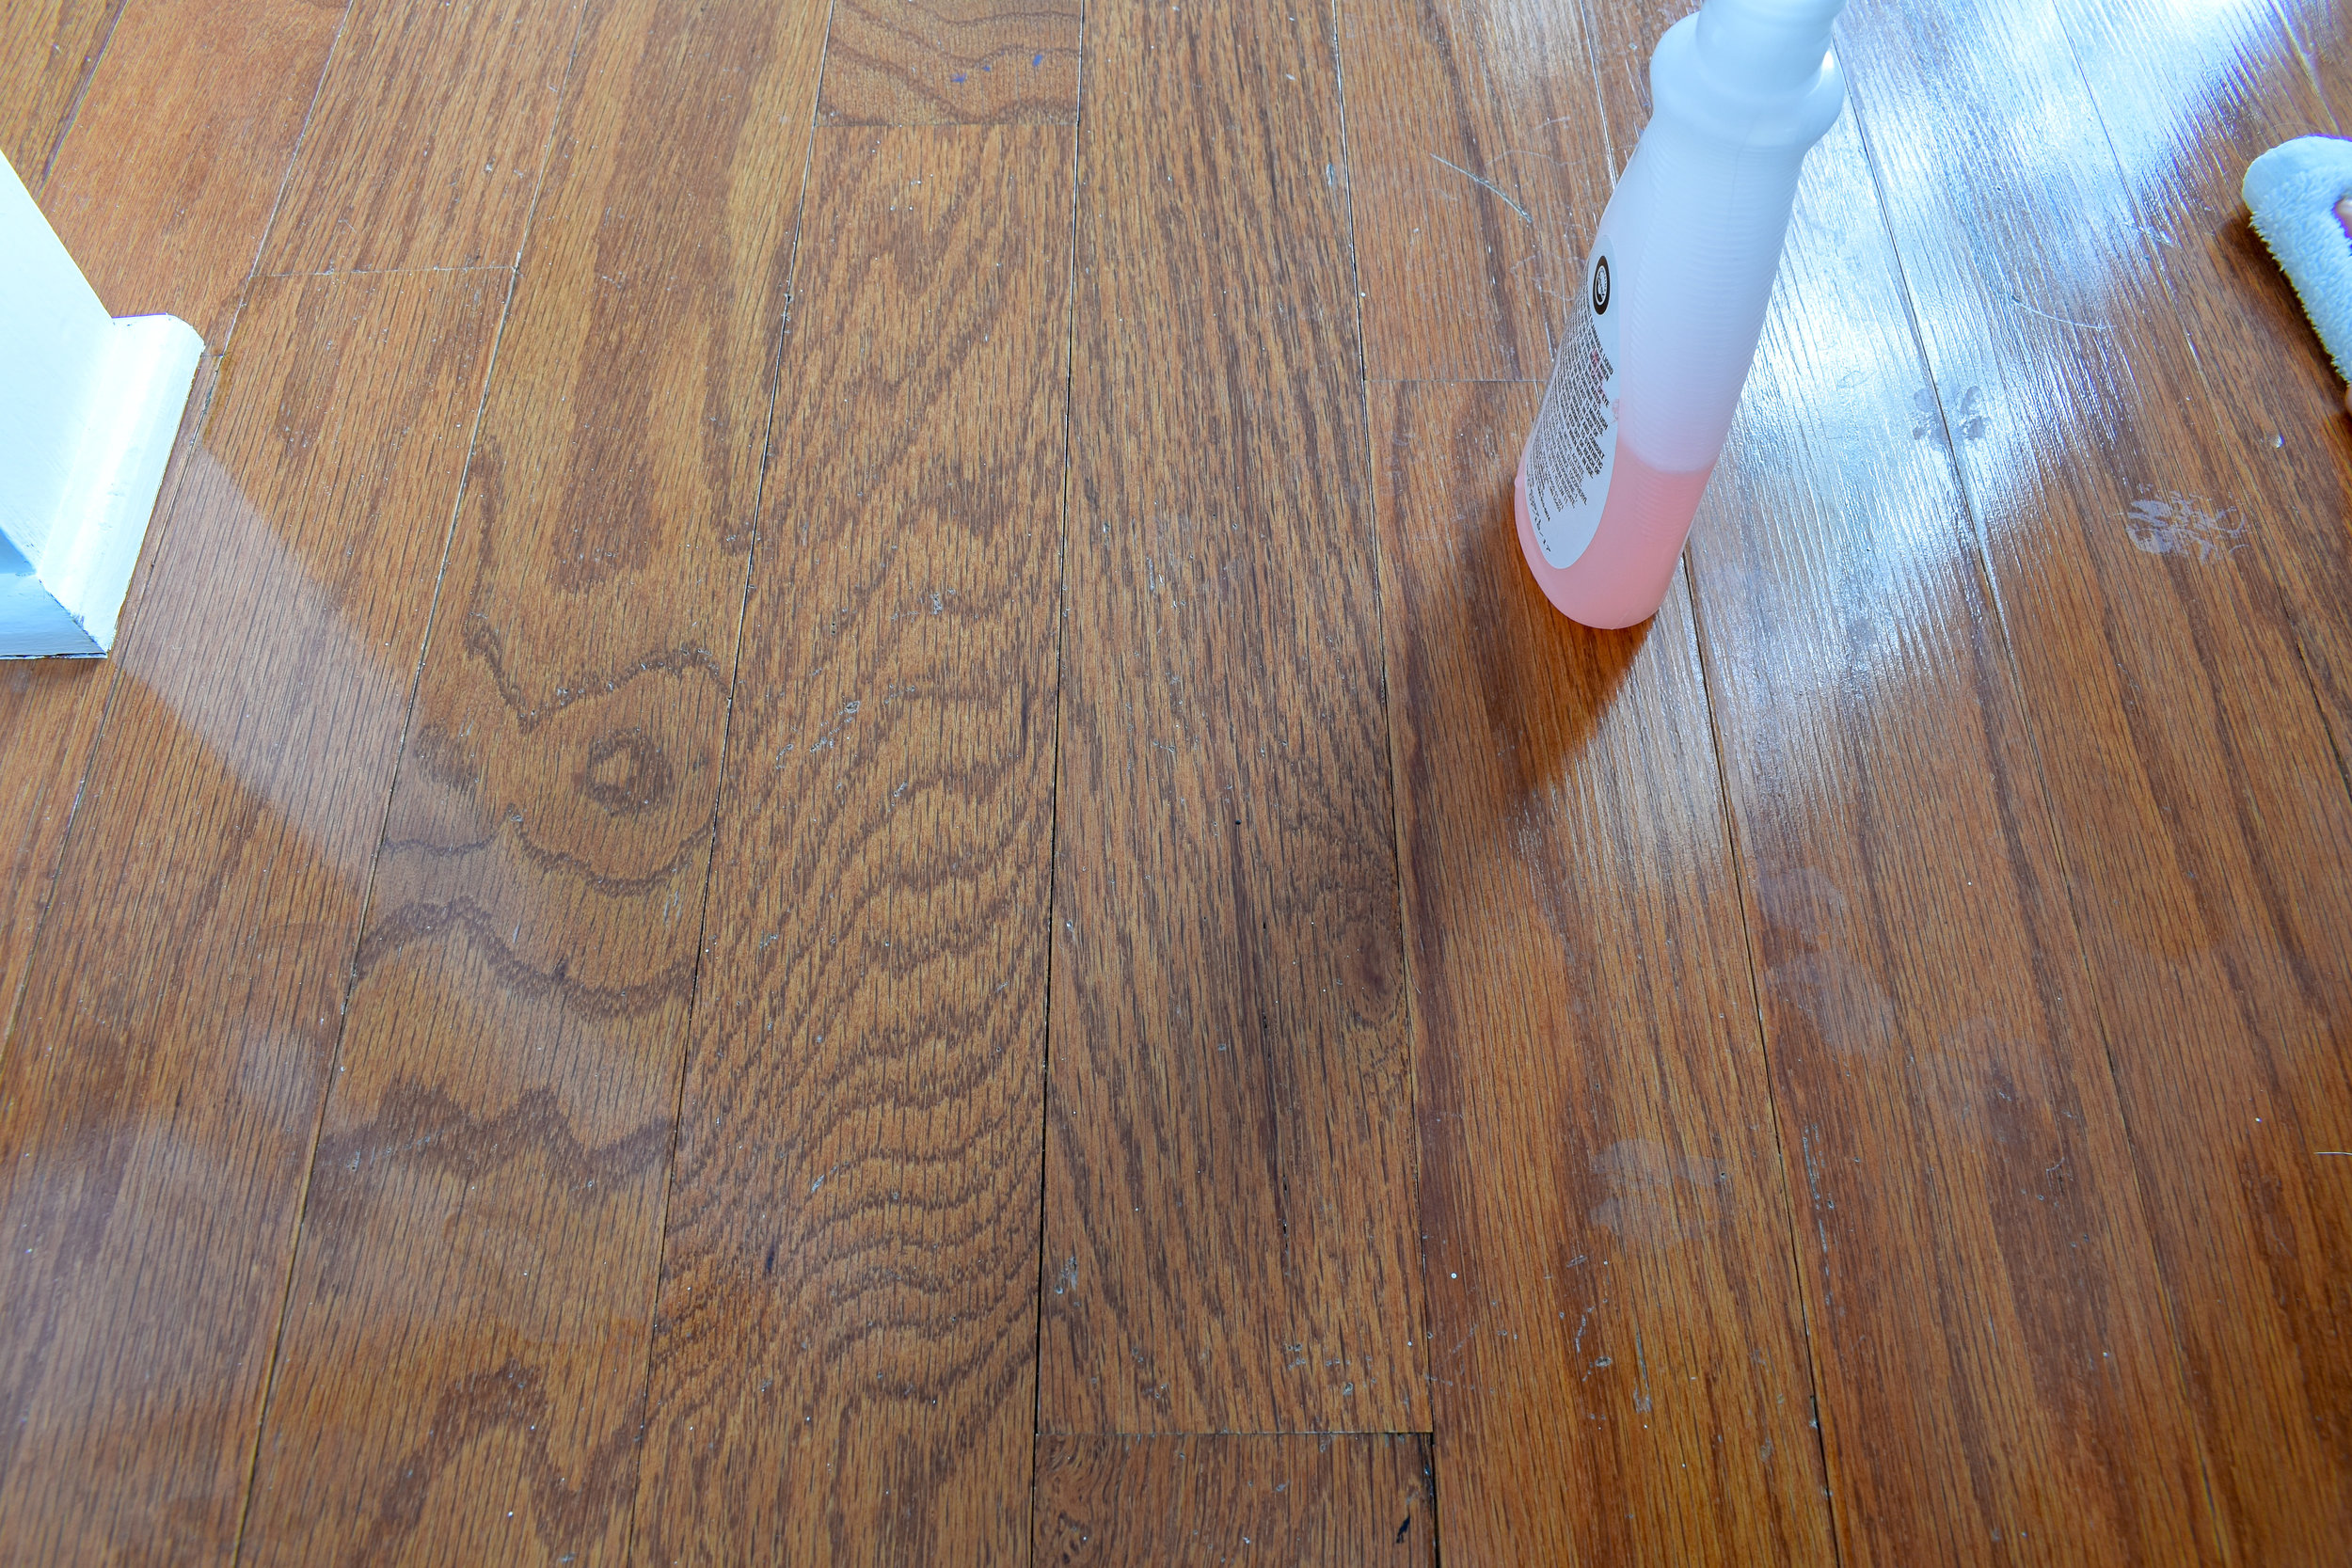 How To Make Old Hardwood Floors Shine, Easiest Way To Remove Hardwood Floors